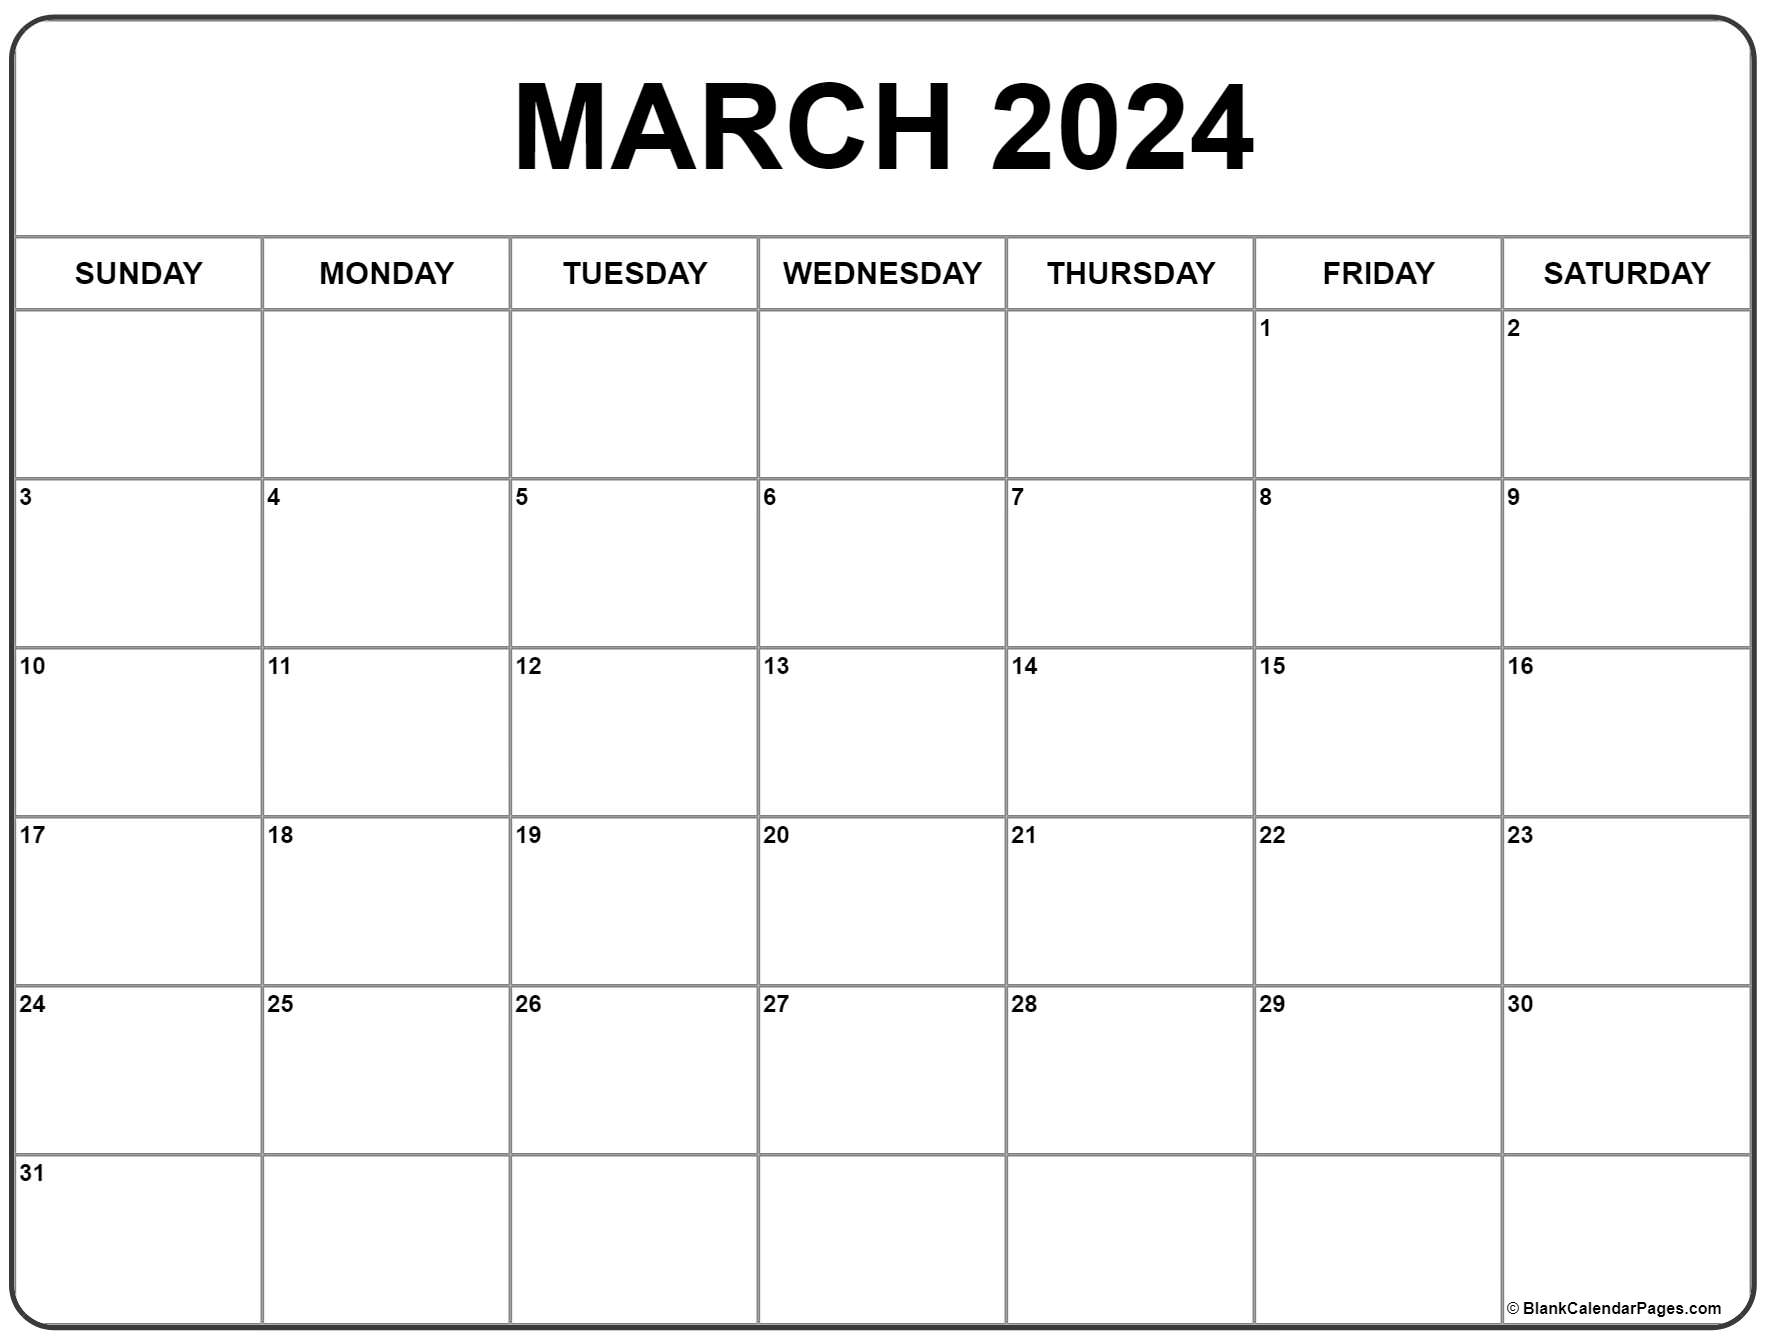 March 2024 Calendar | Free Printable Calendar for 2024 March Calendar Free Printable